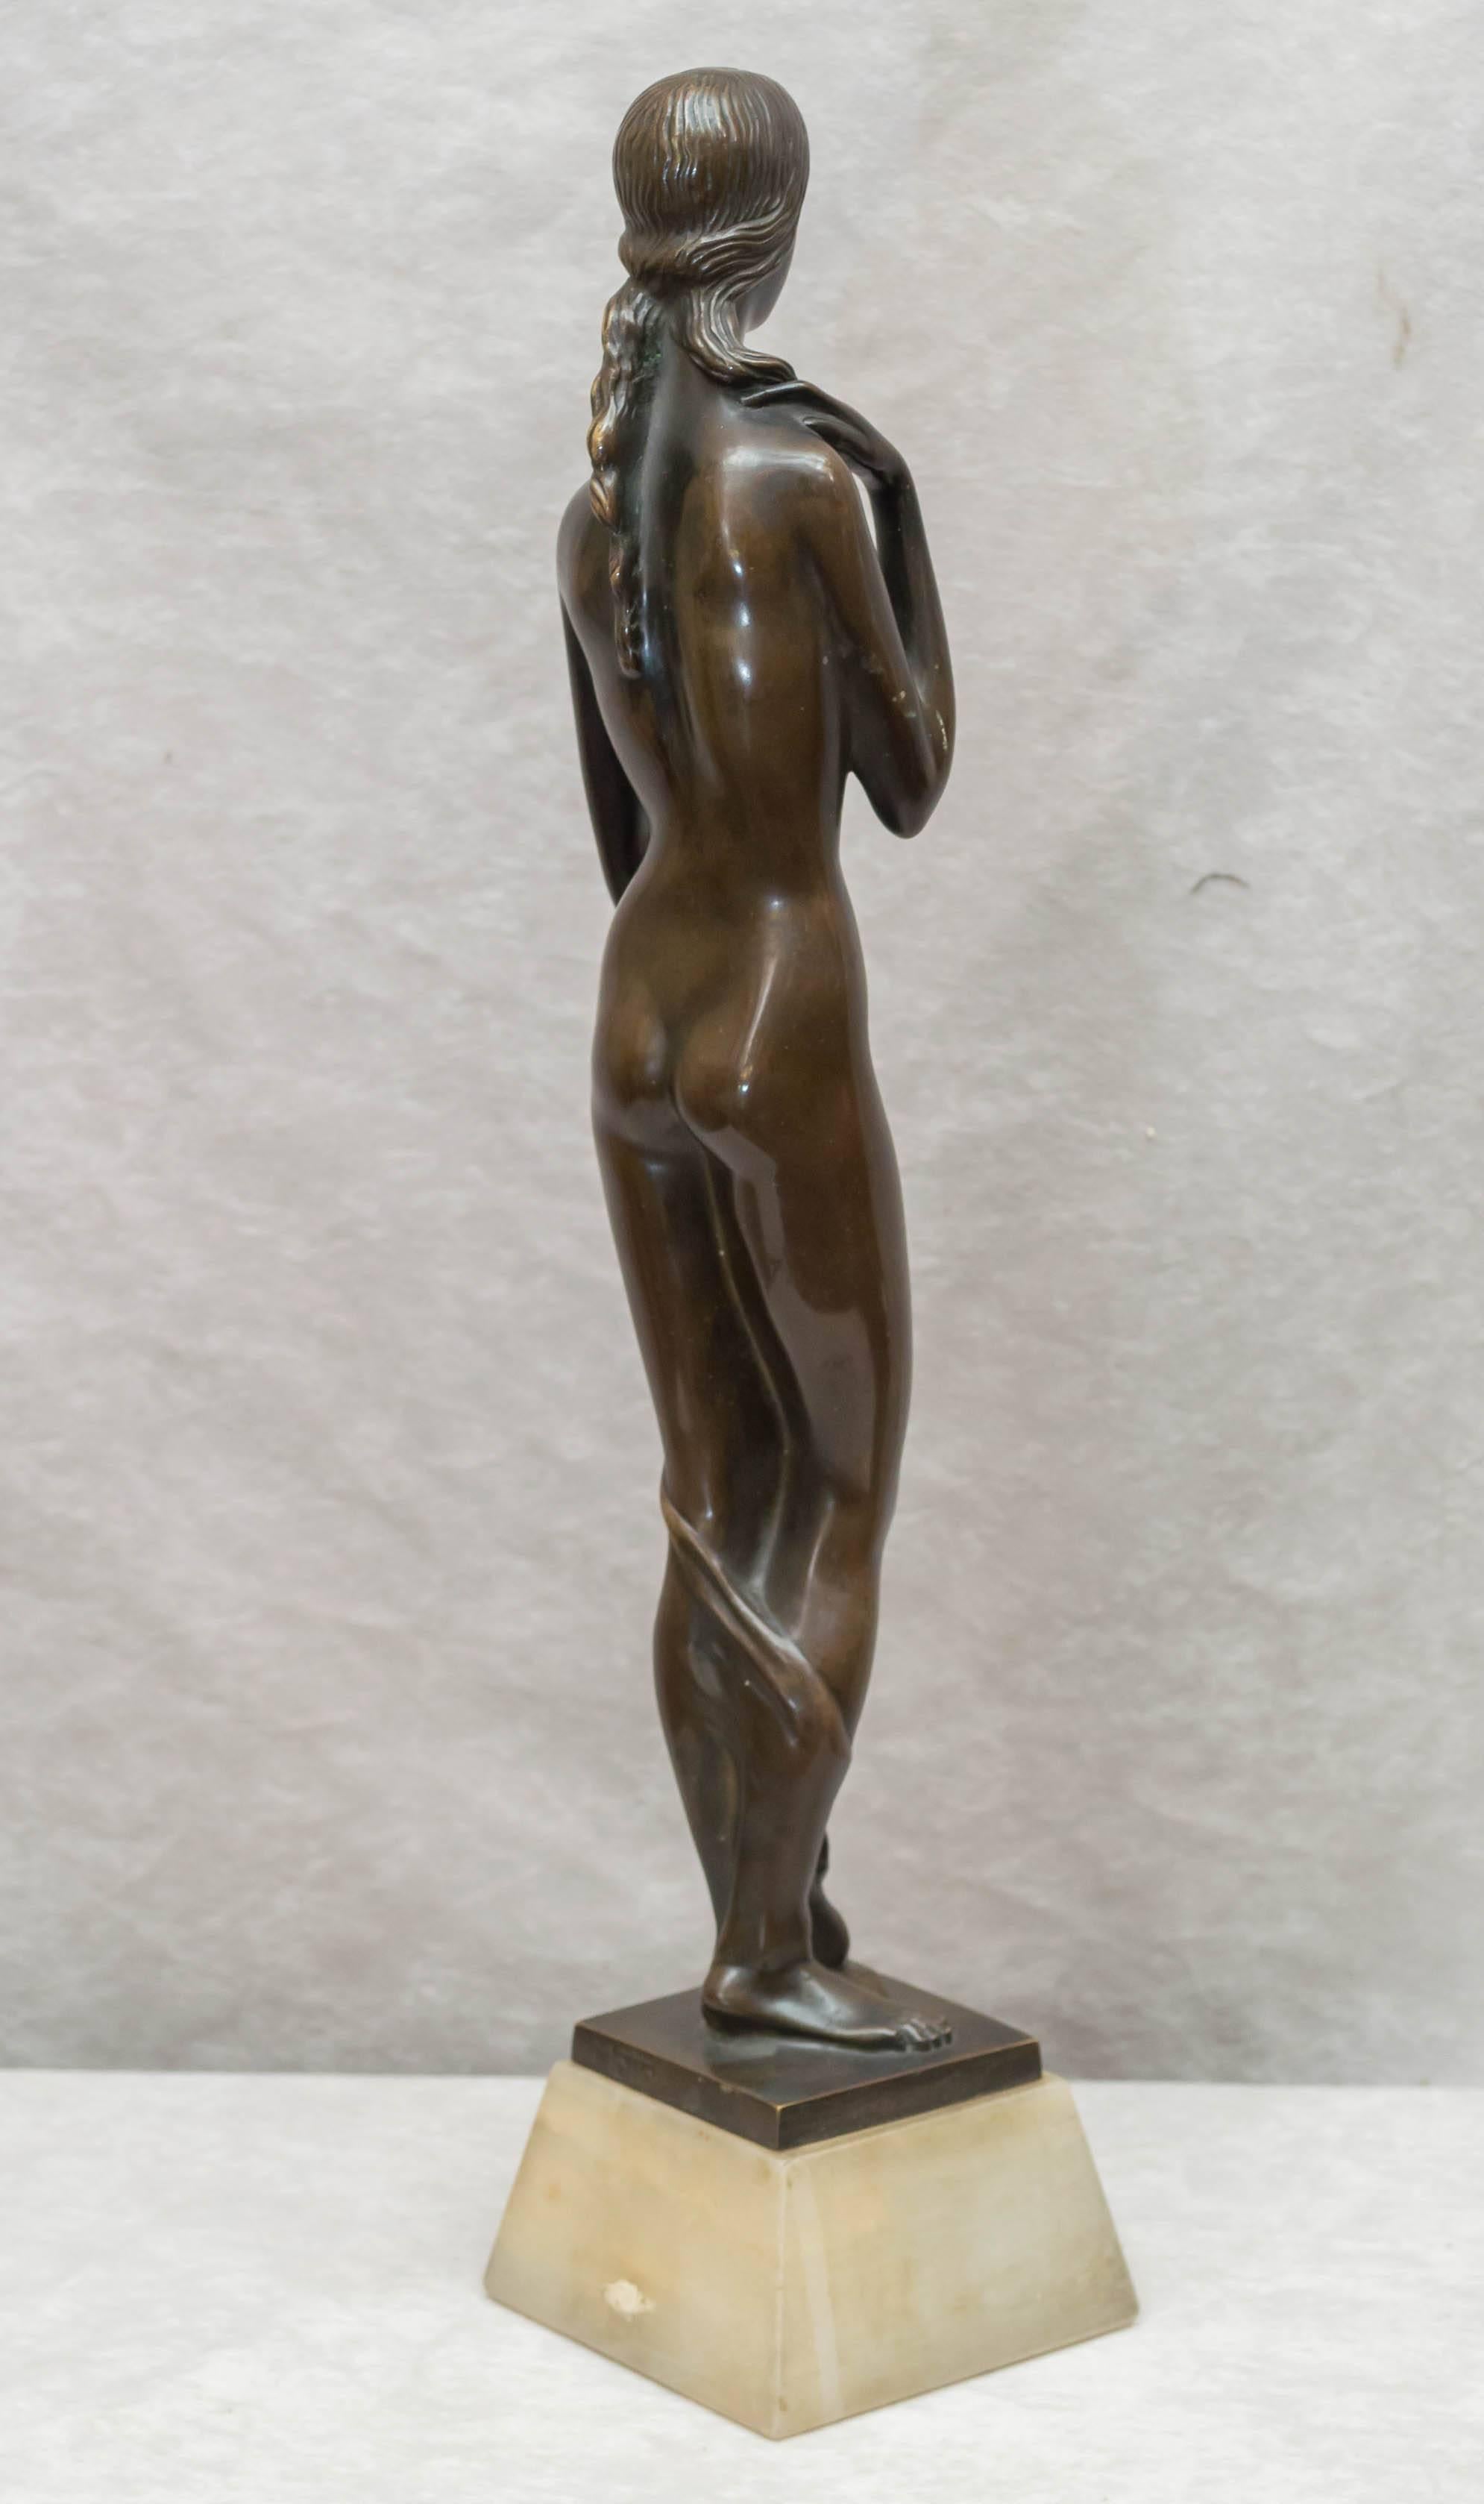 Early 20th Century Art Deco / Moderne Bronze Figure of a Nude, American, Signed Joseph Motto